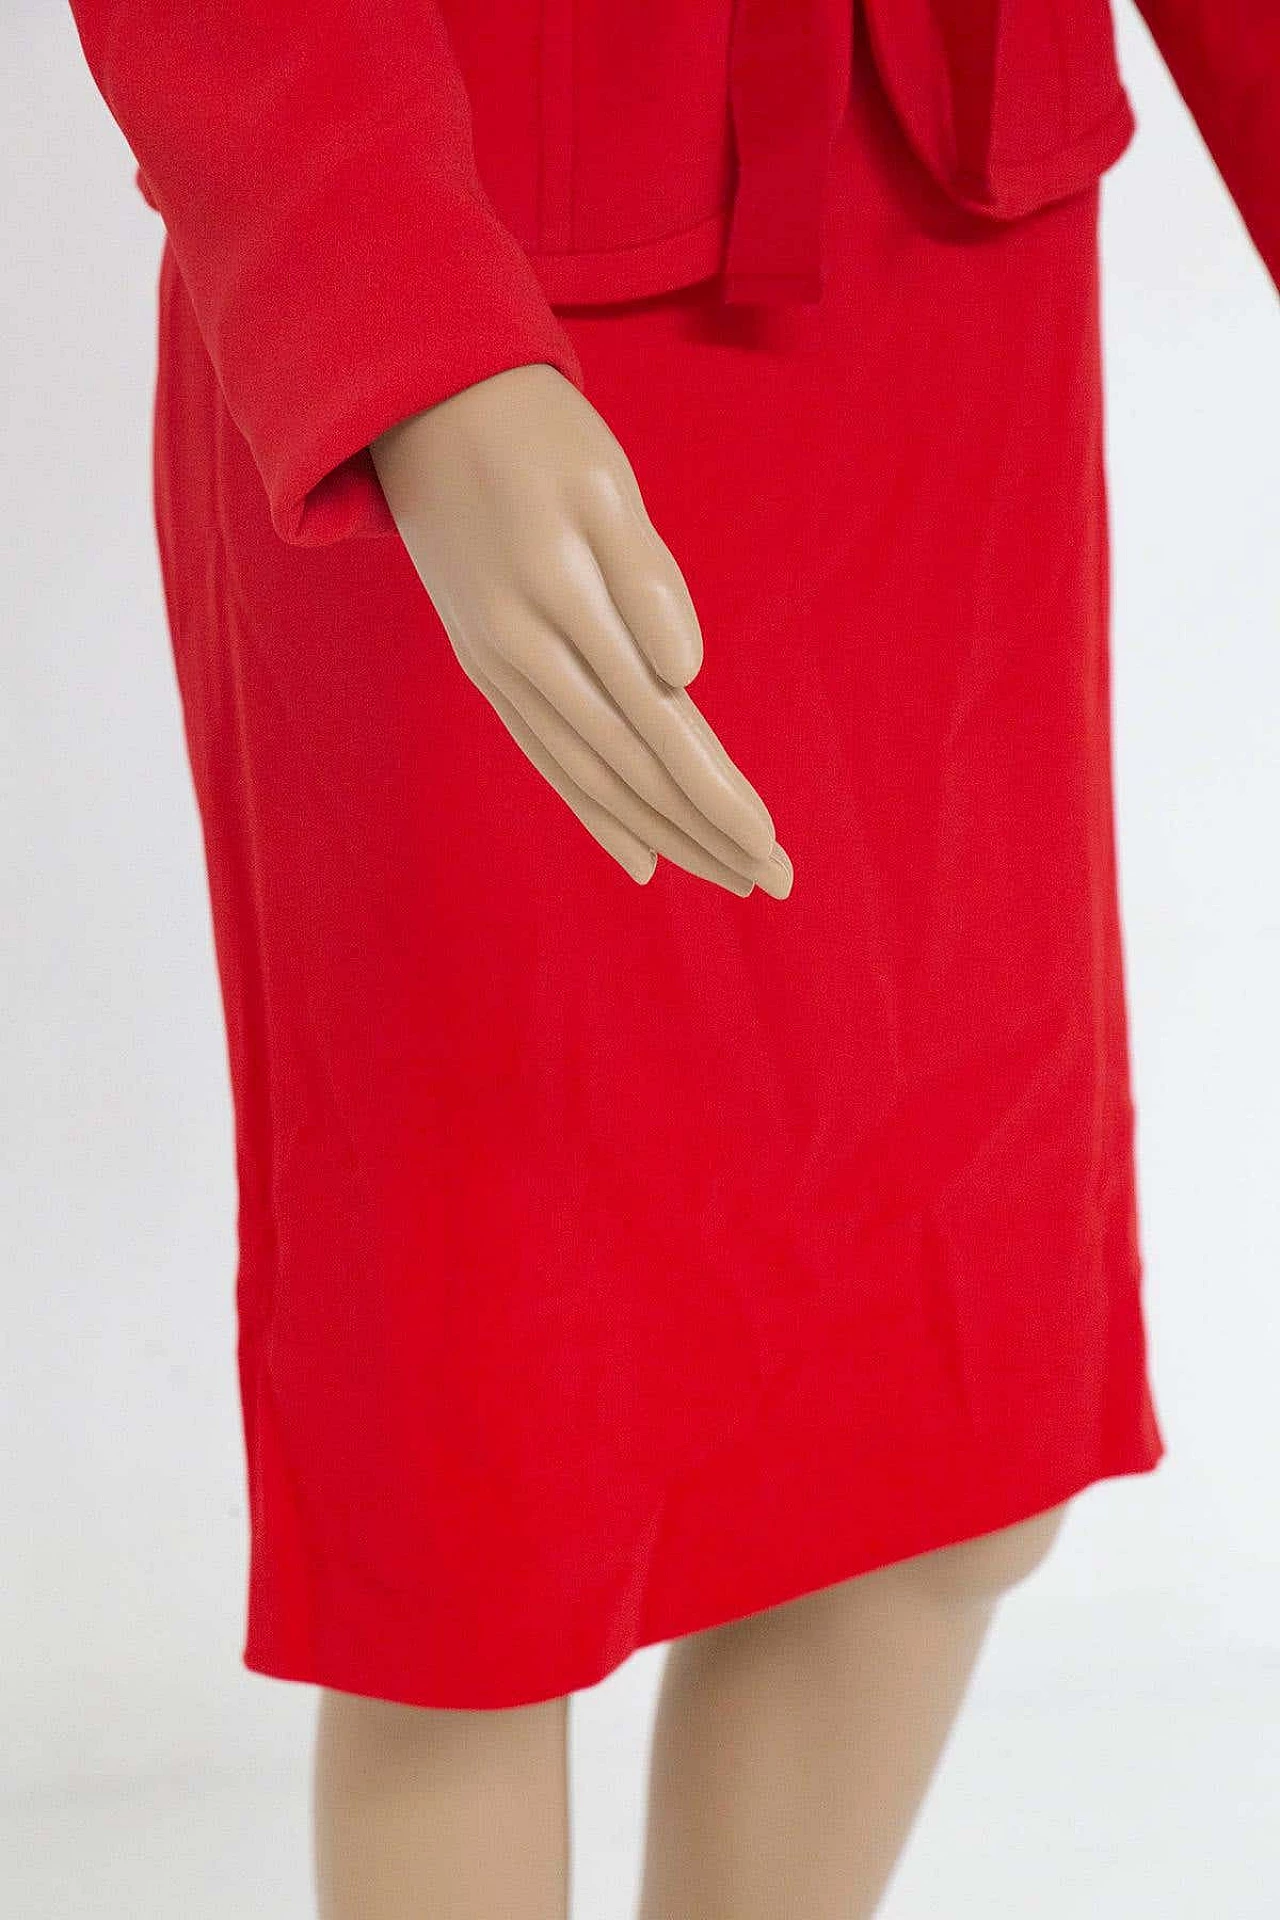 Red sheath dress by Valentino Garavani, 1990s 5